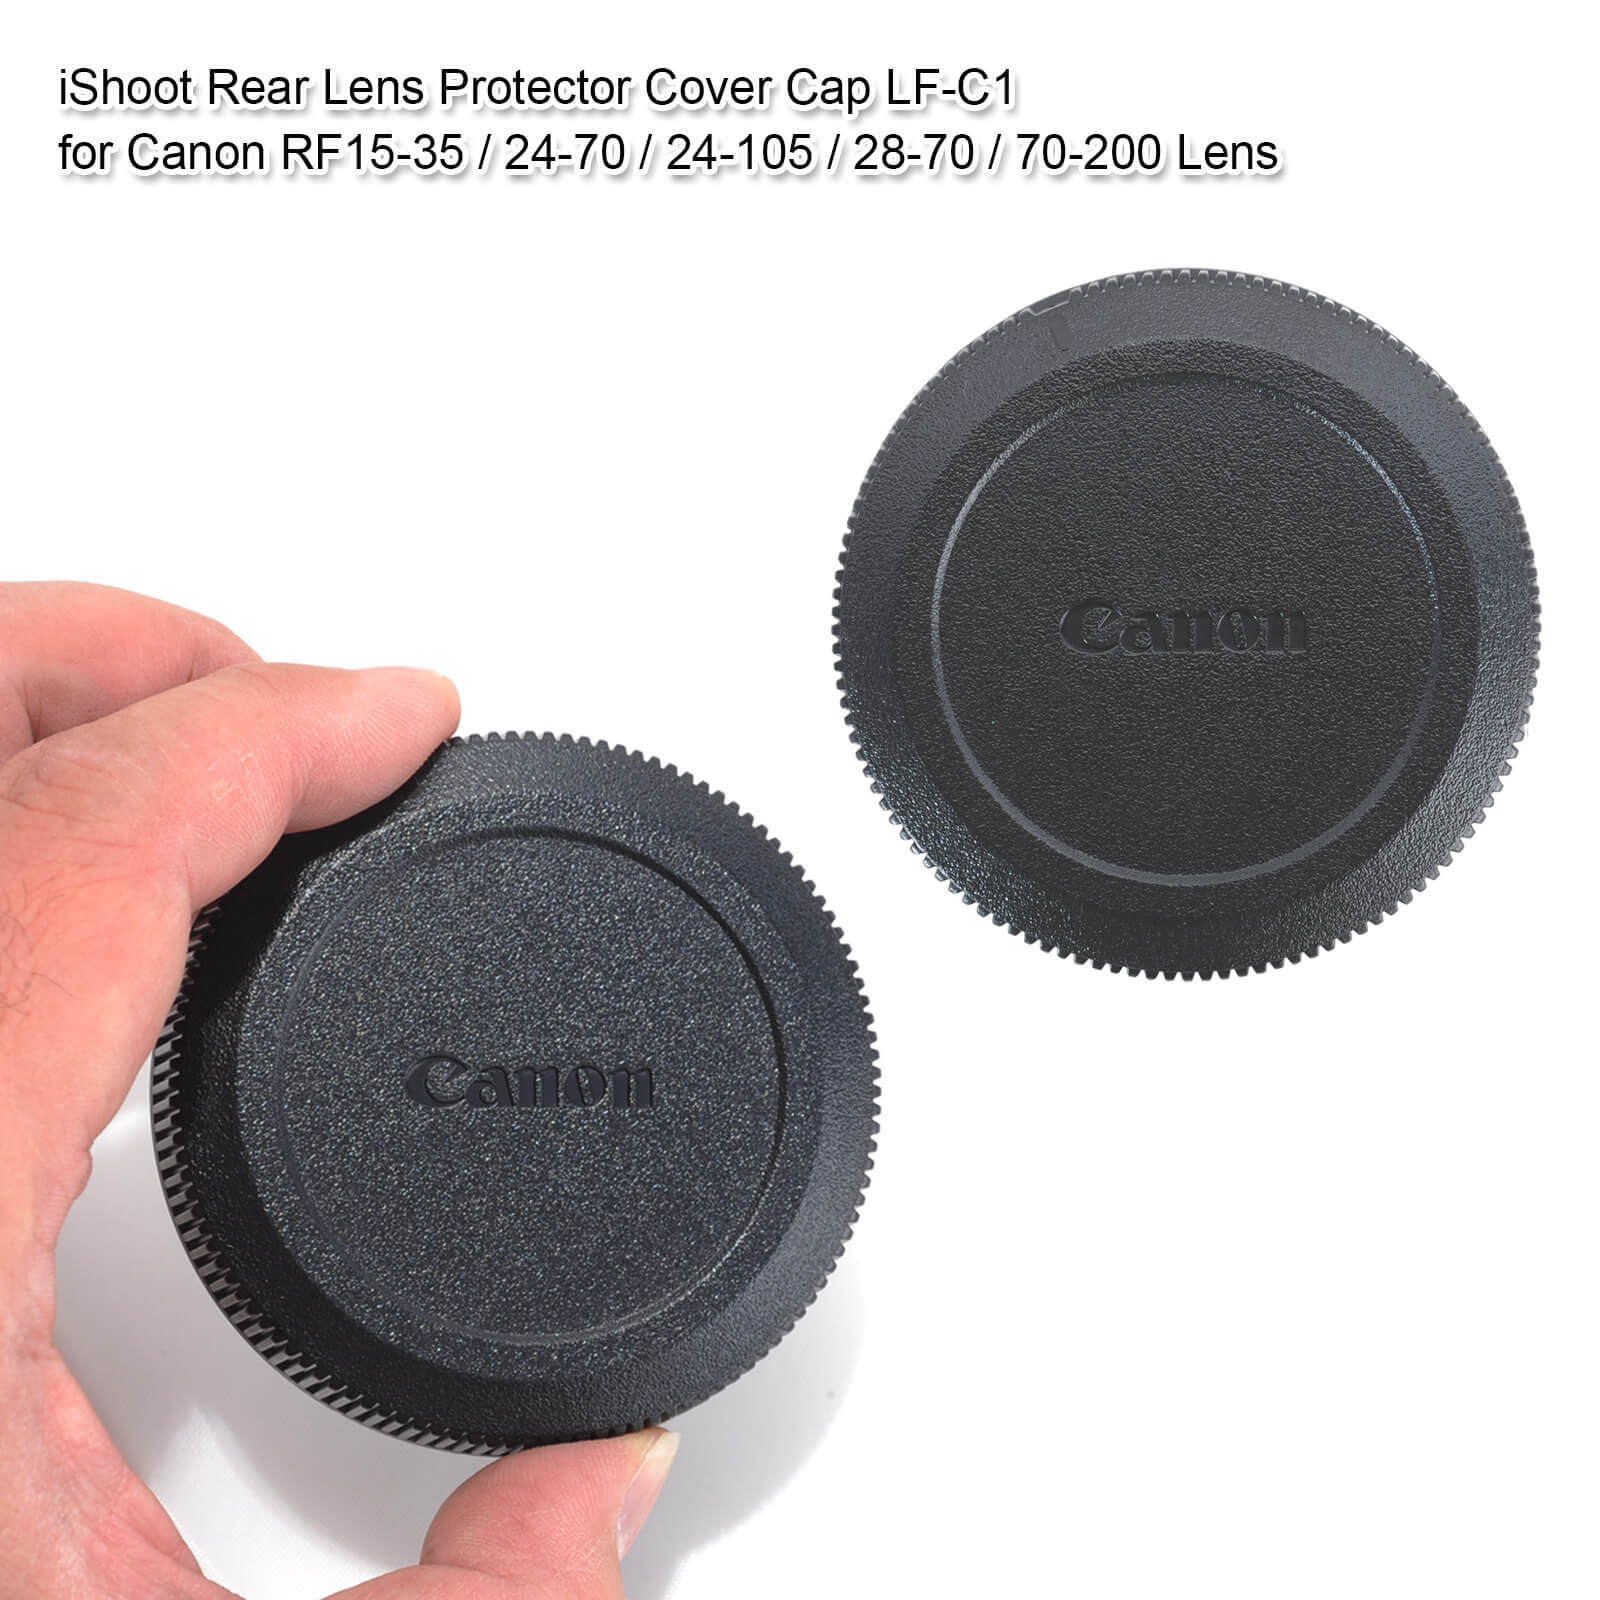 Camera Body Cap and Rear Lens Cover Cap for Canon EOS R / RP Camera